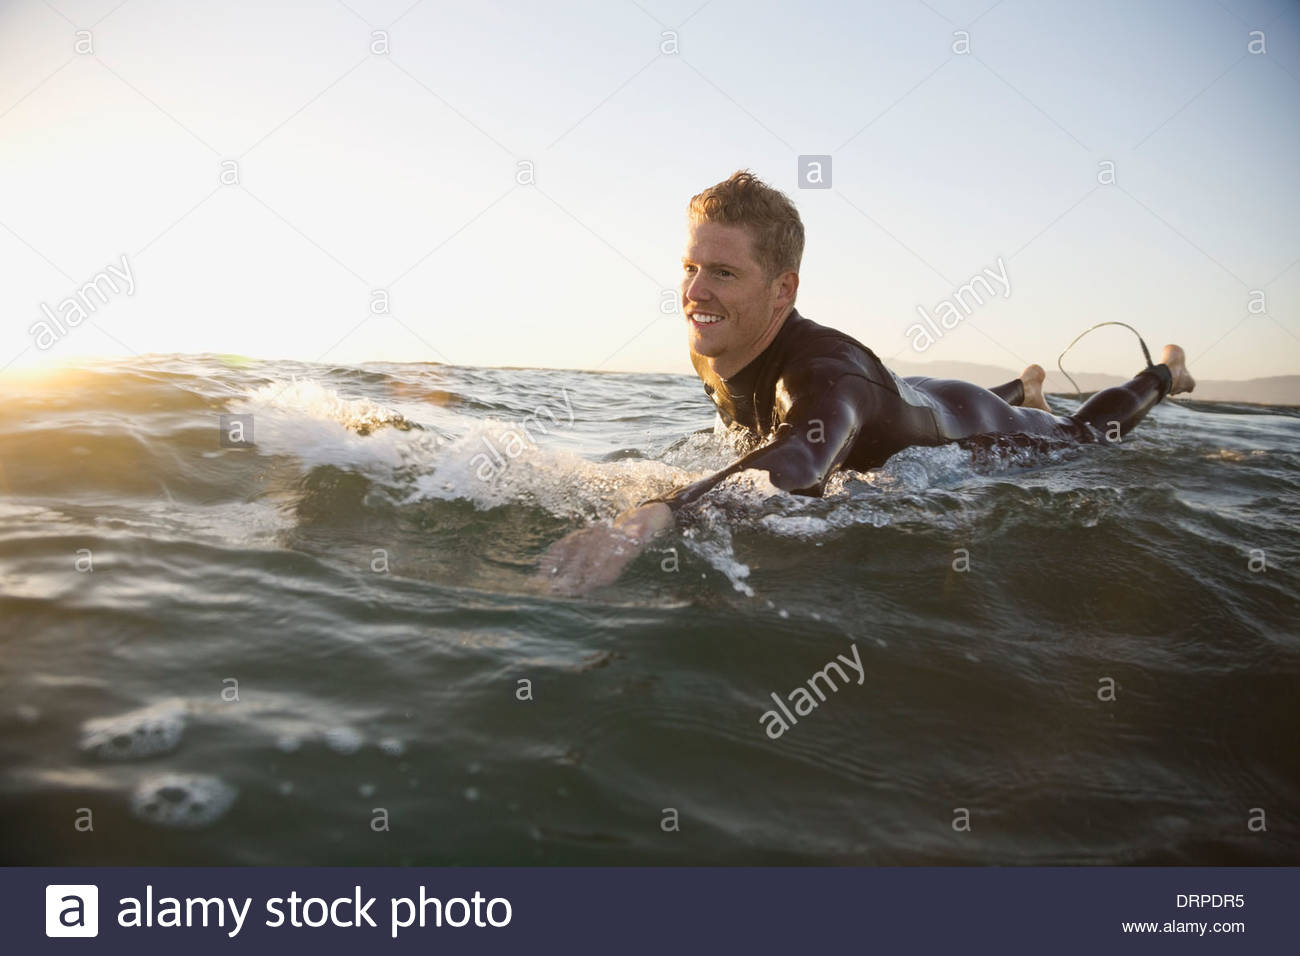 Man paddling on surfboard Stock Photo